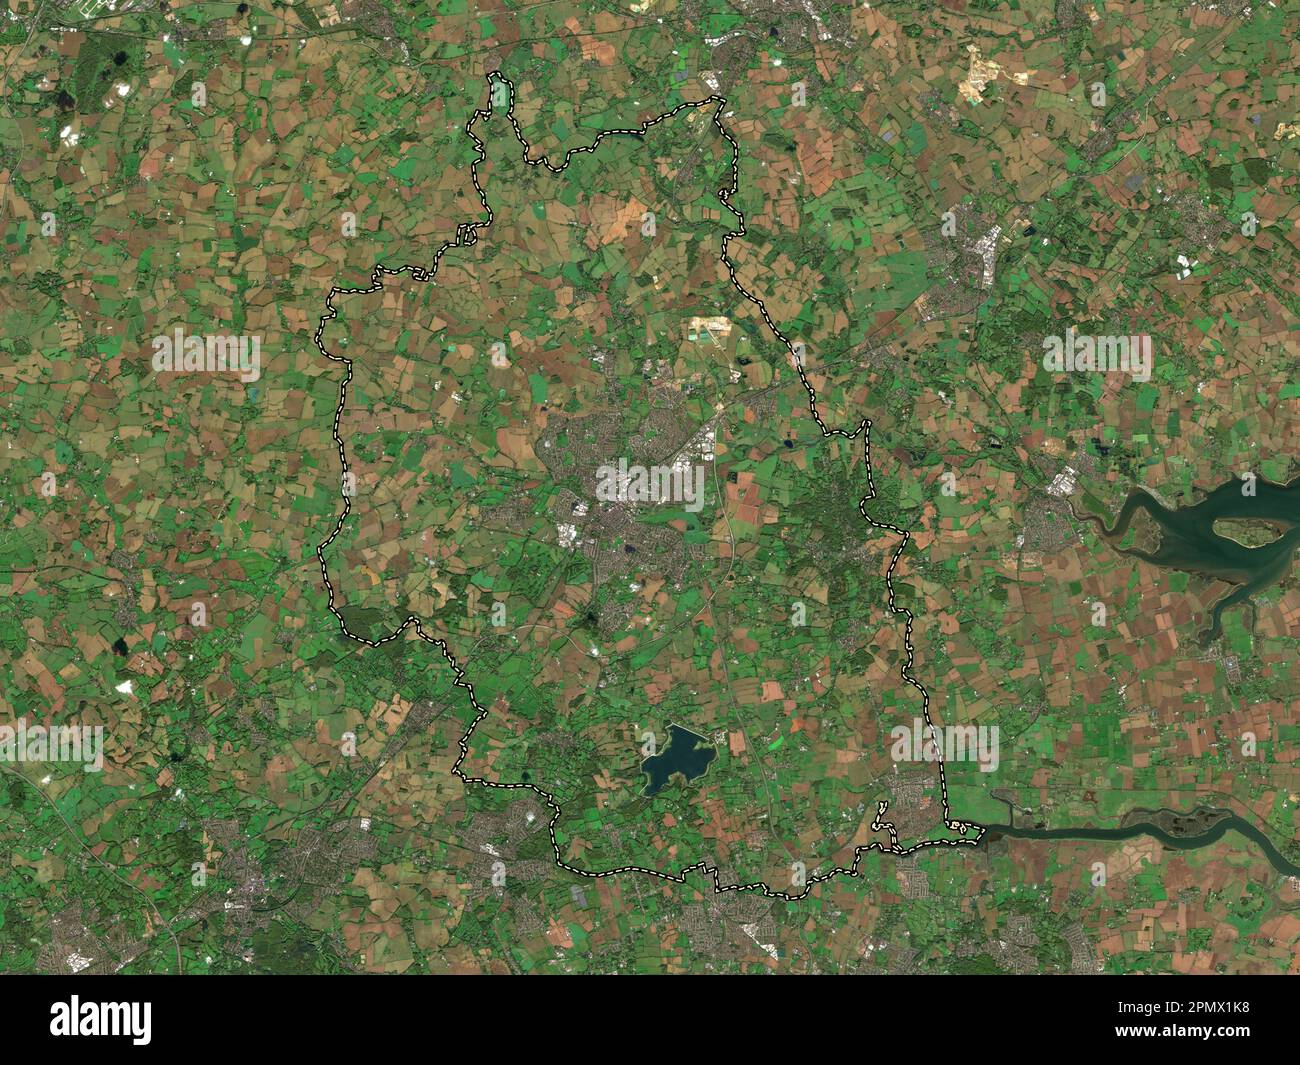 Chelmsford, non metropolitan district of England - Great Britain. Low resolution satellite map Stock Photo